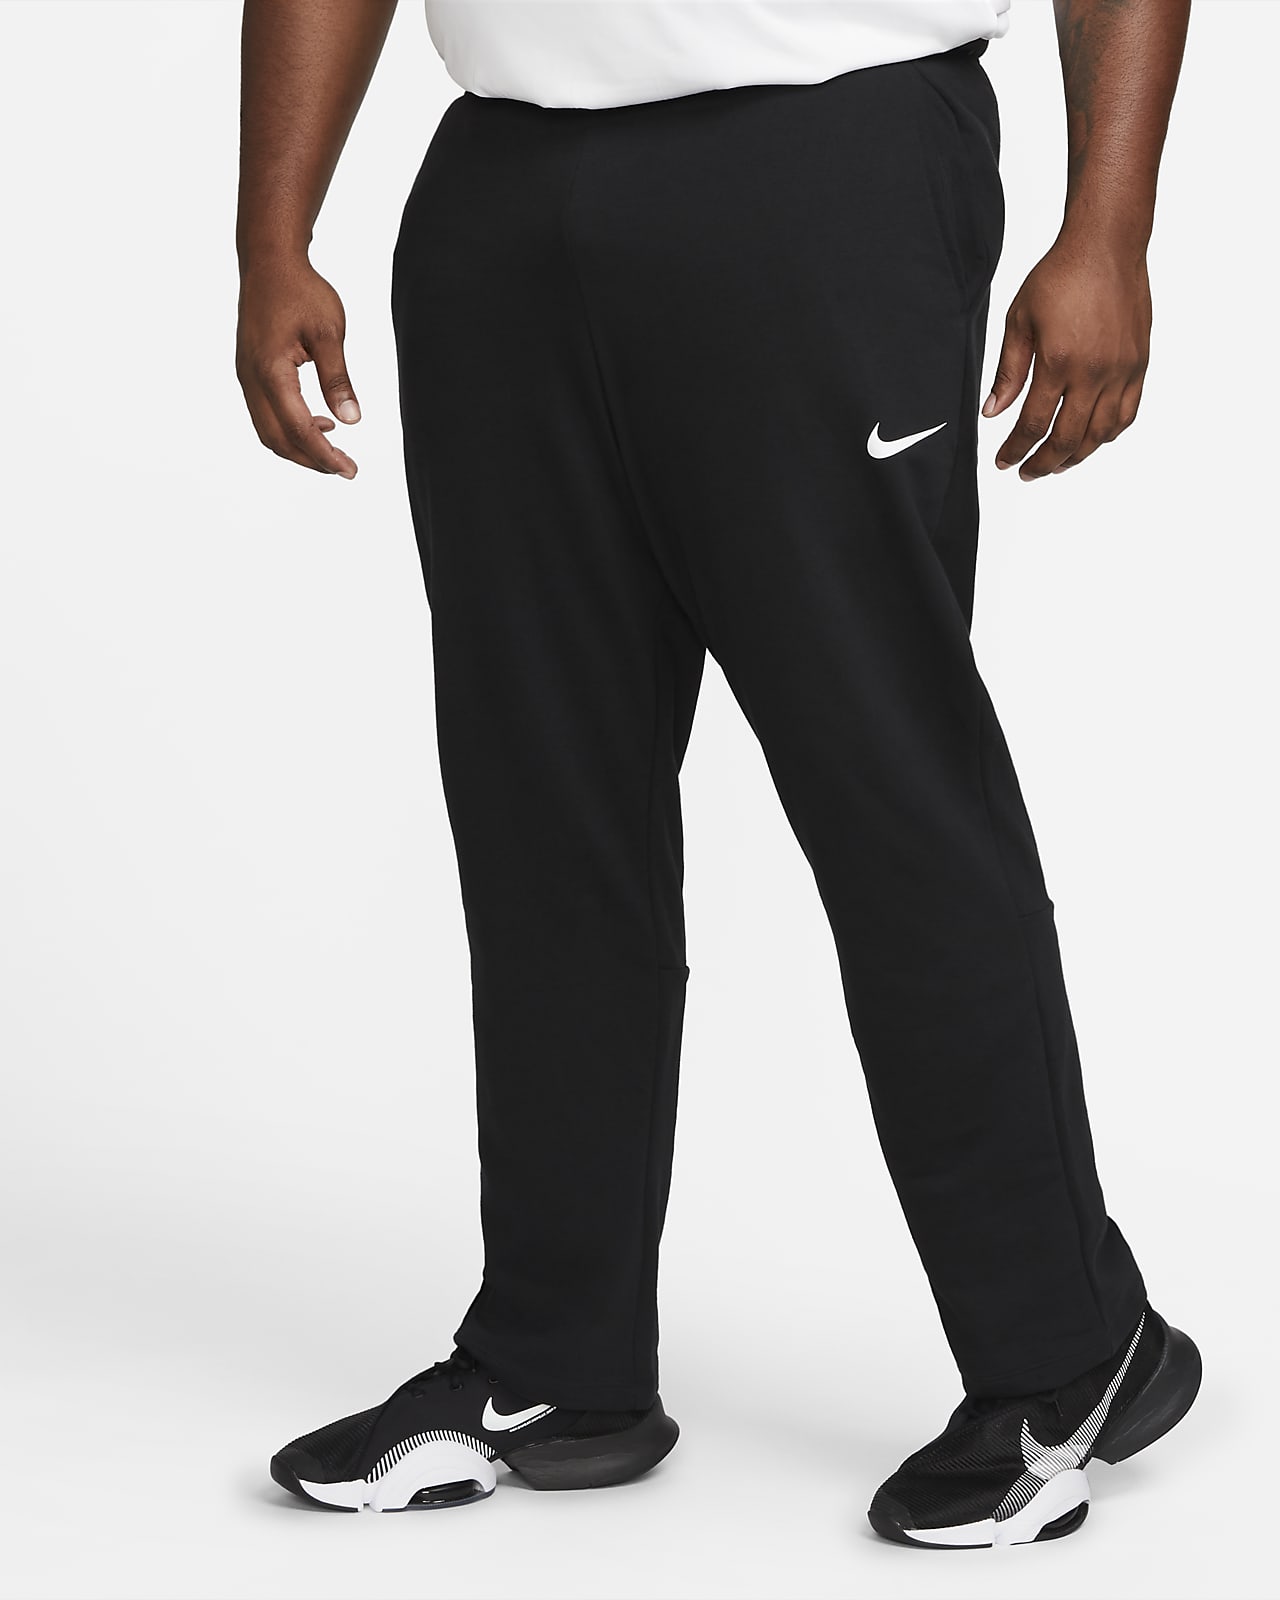 Dibuja una imagen representación Implacable Nike Dri-FIT Men's Training Pants. Nike.com